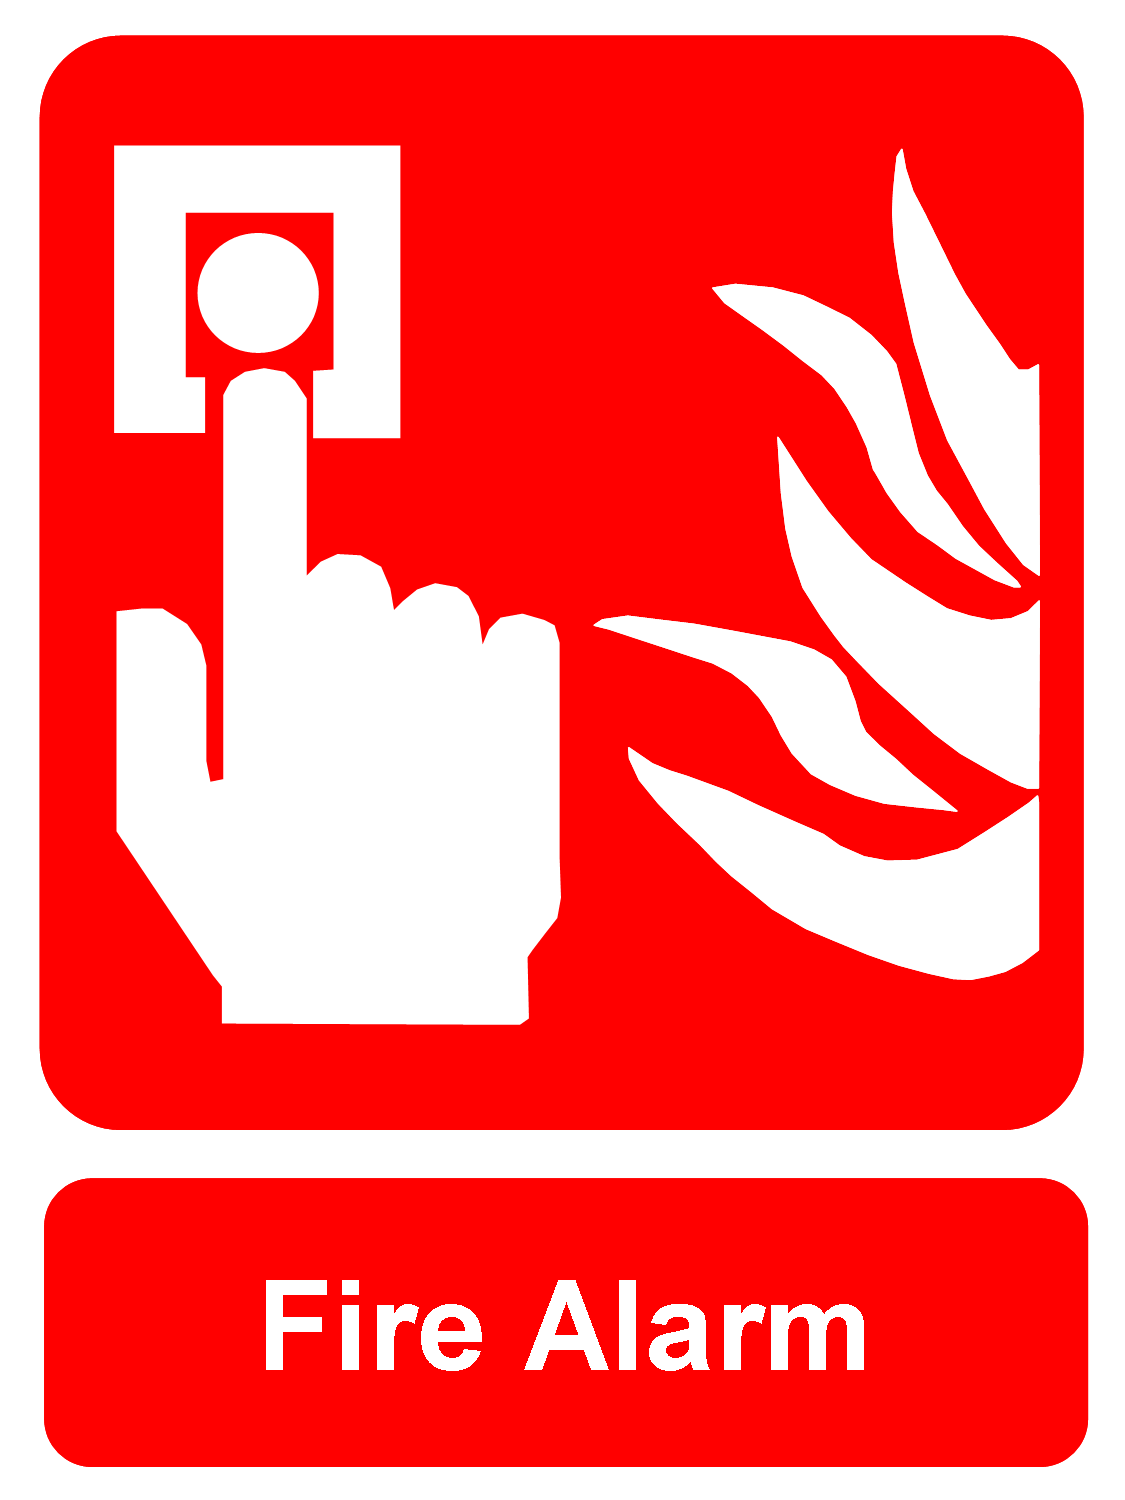 Fire alarm clipart 